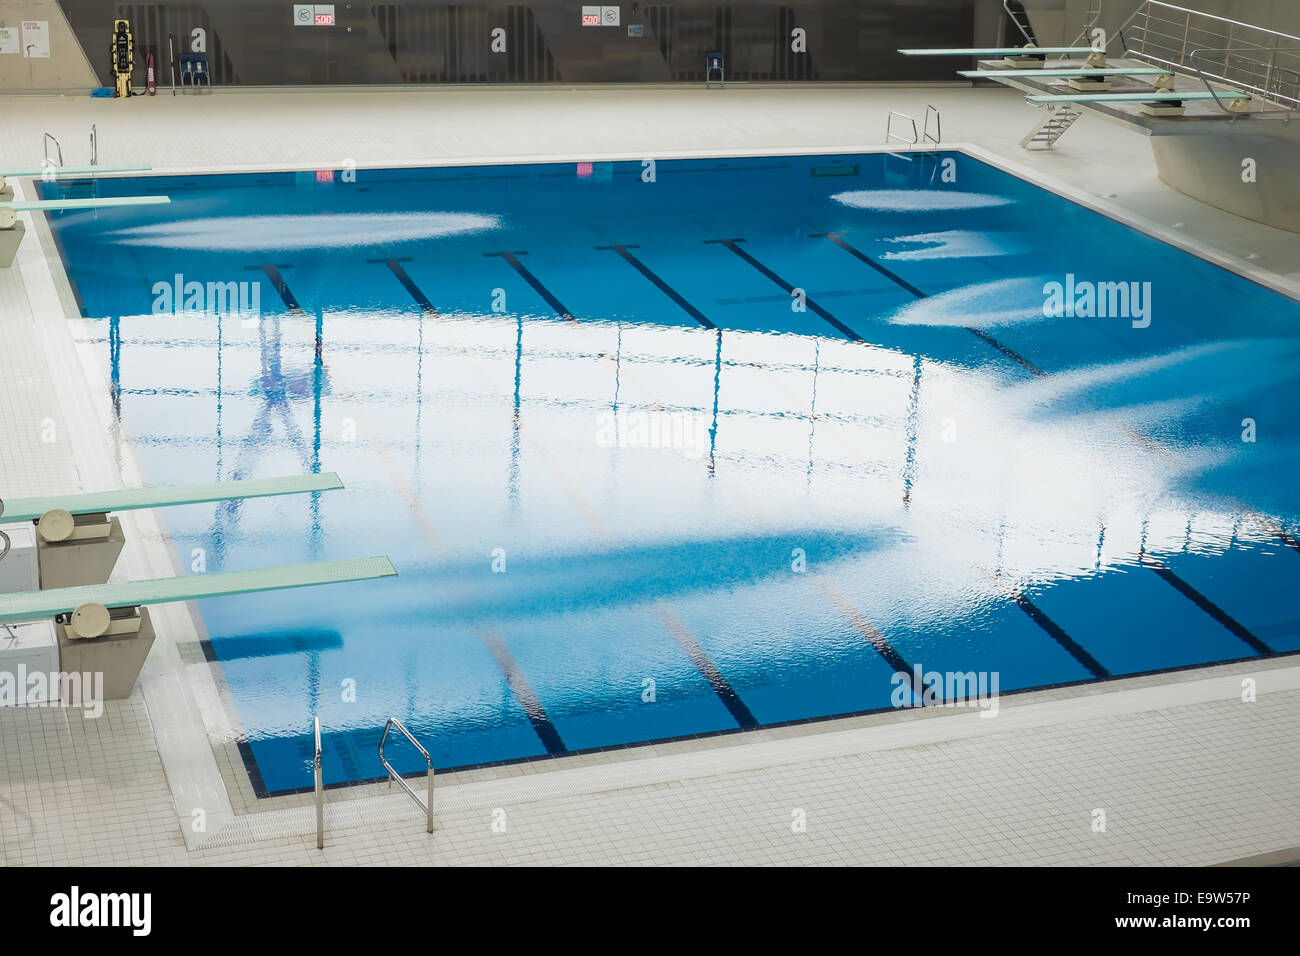 Diving Pool, The Aquatic Centre, Queen Elizabeth Olympic Park, London Stock Photo